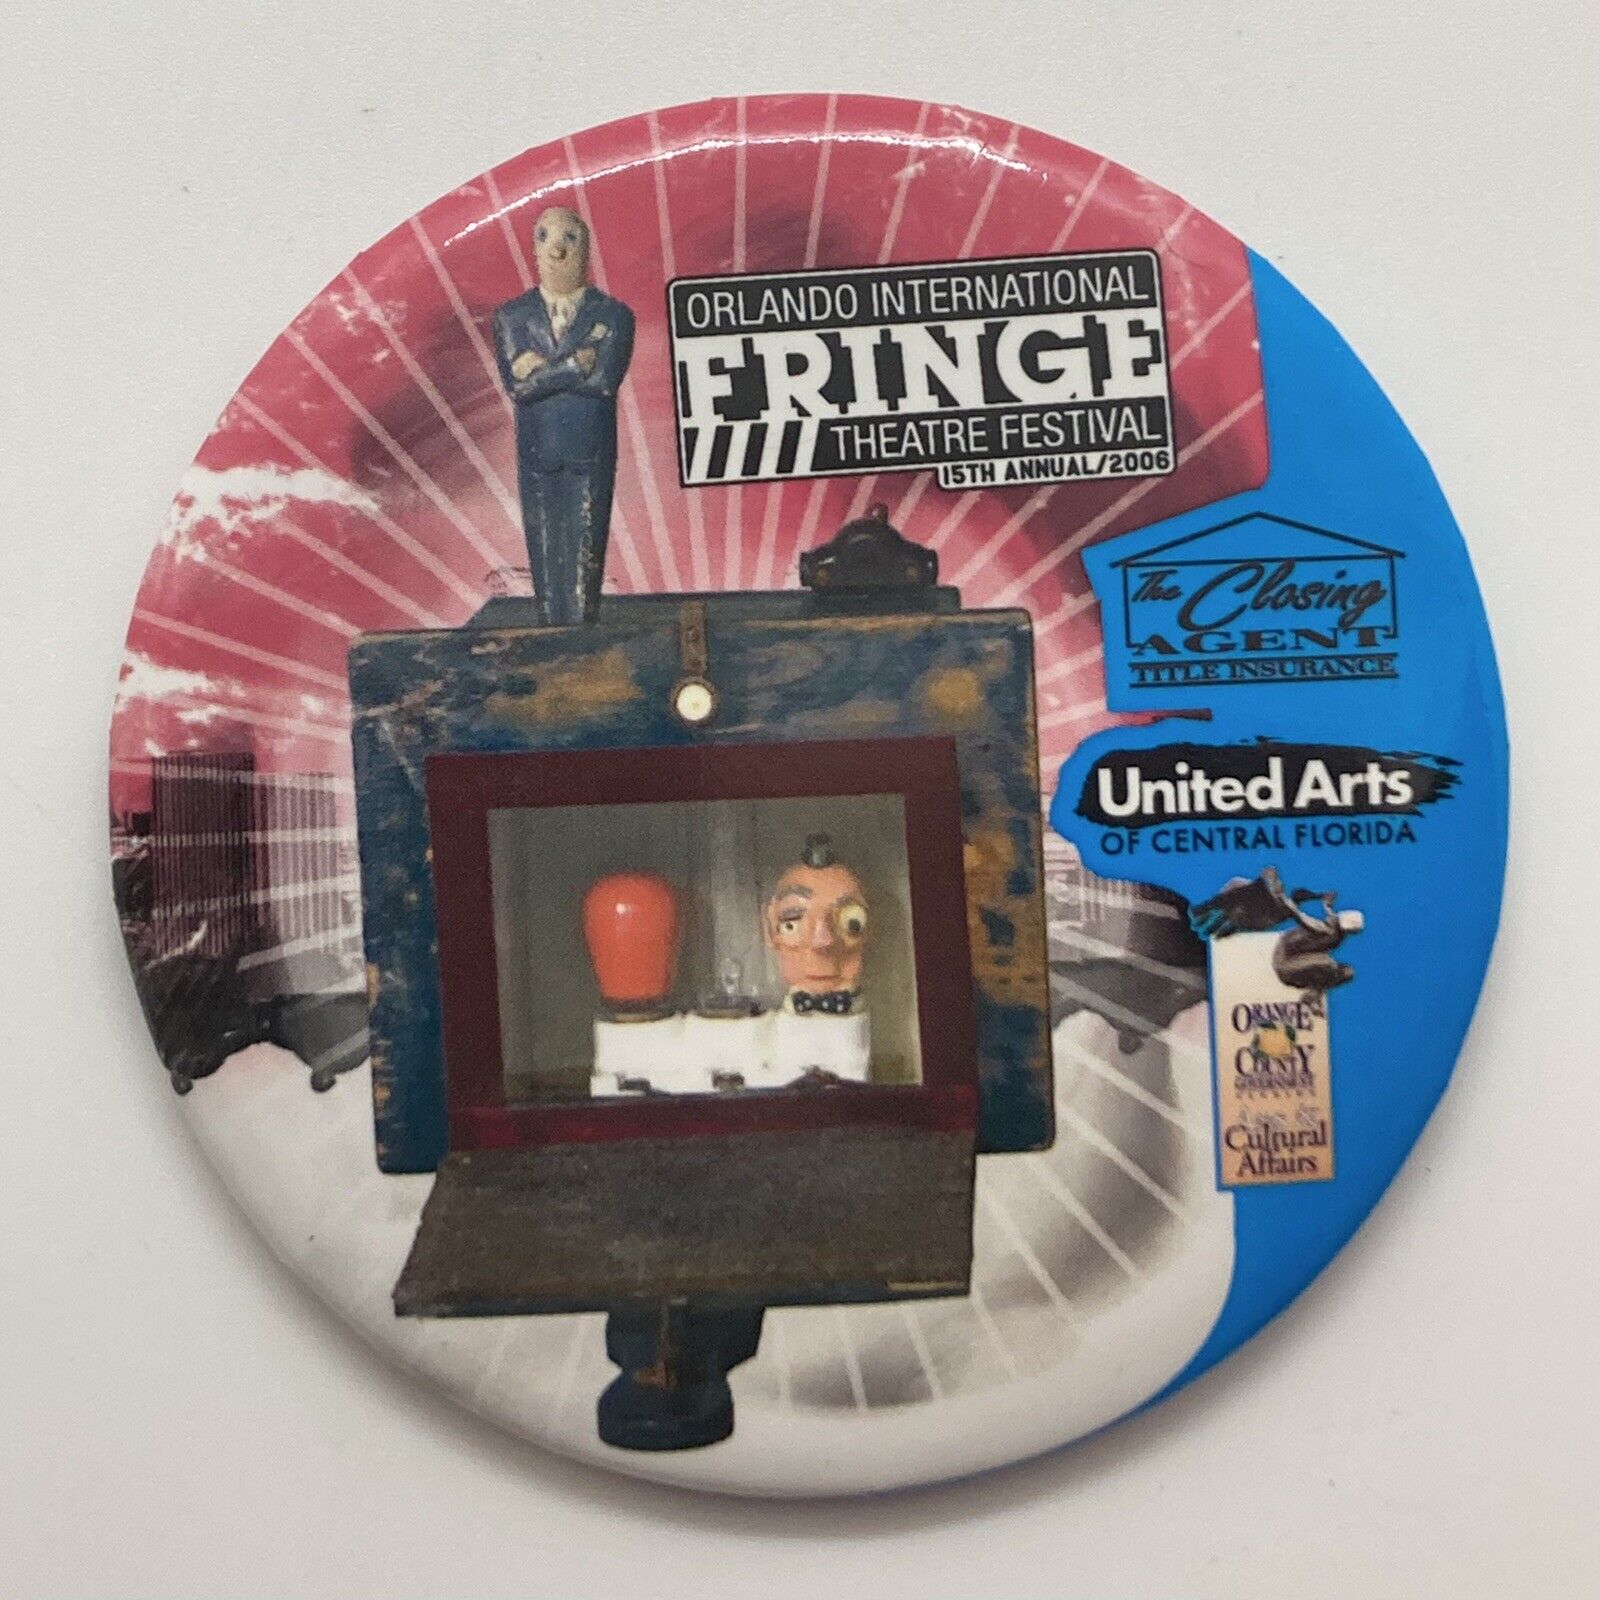 2006 Orlando International Fringe Theater Festival Pinback Button